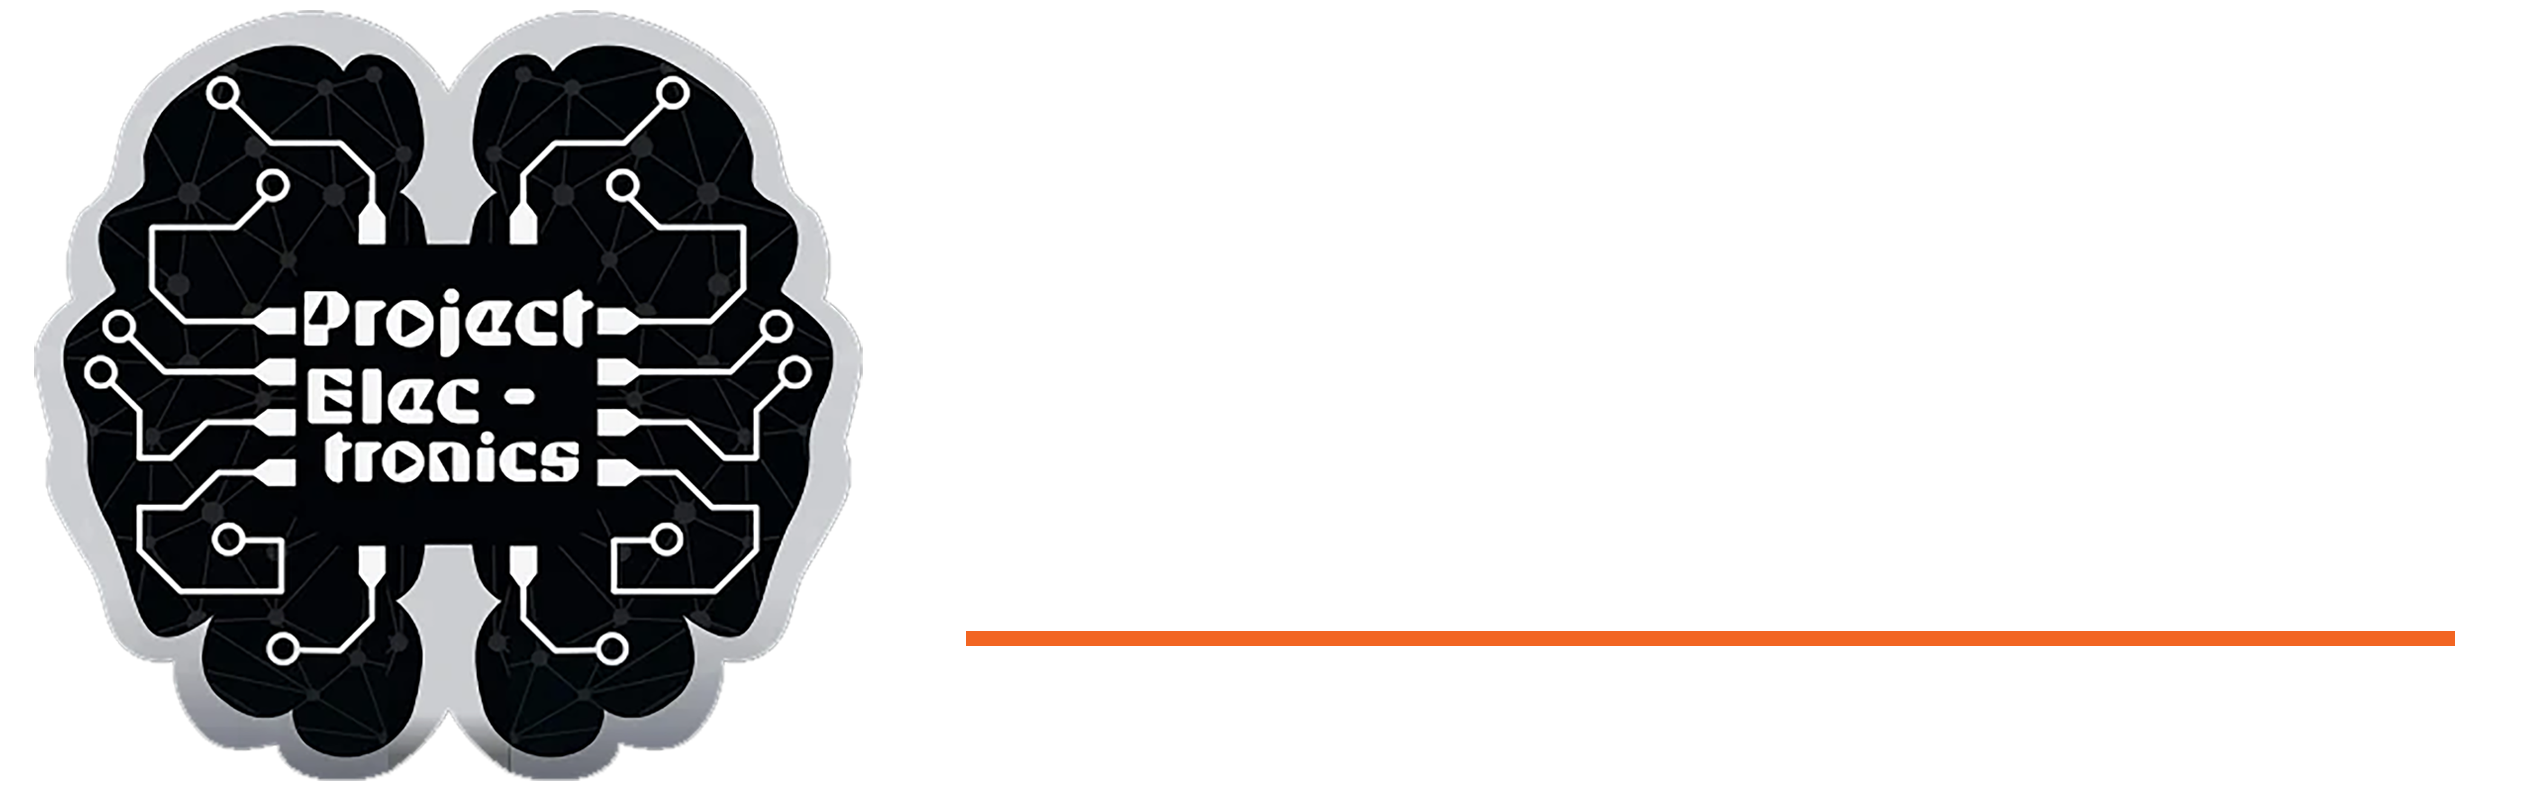 Project Electronics Community Forum